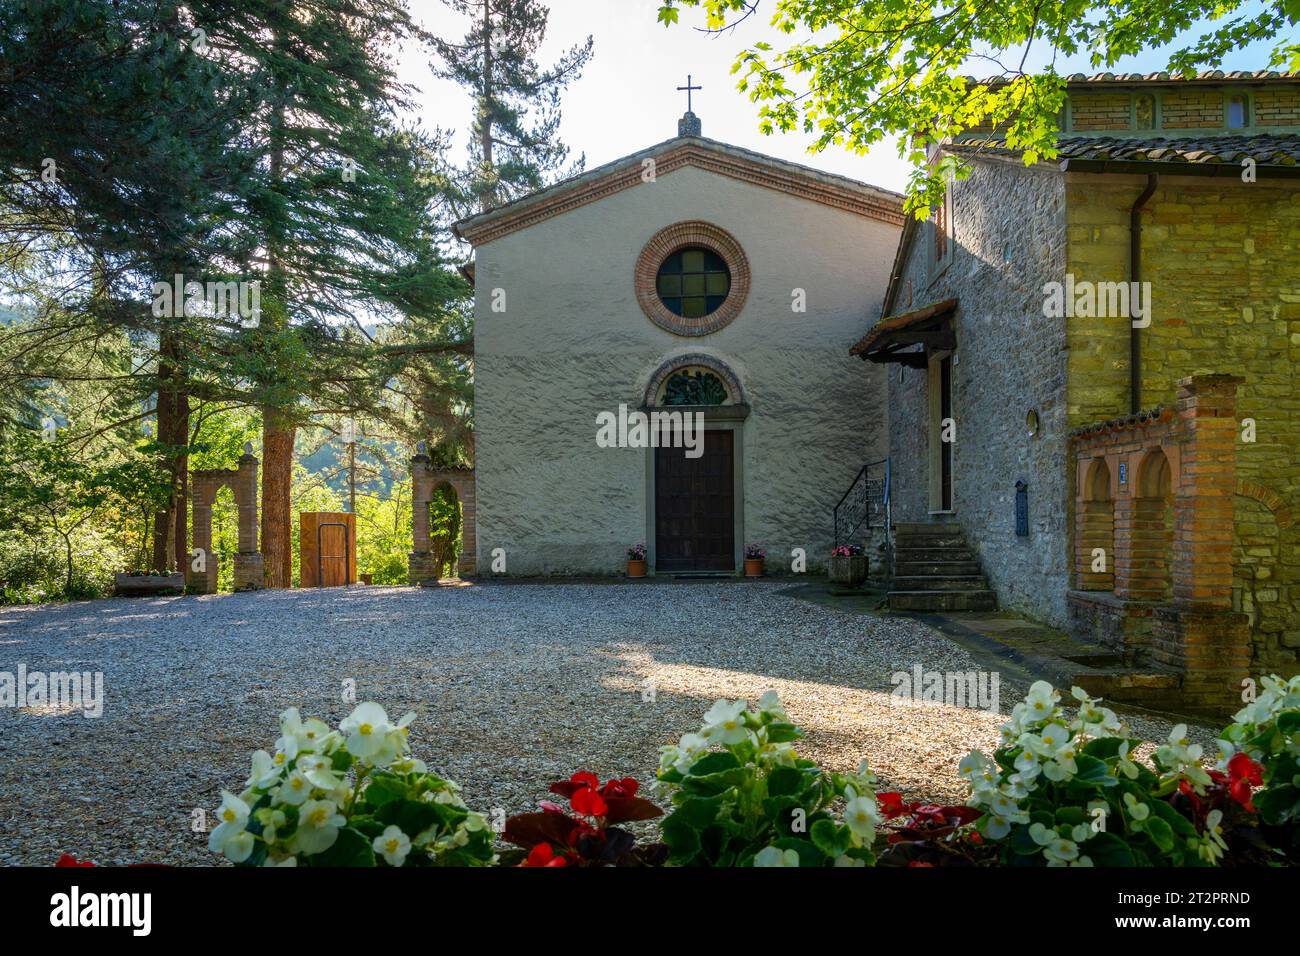 Church of Santa Reparata, Modigliana, Forlì, Emilia Romagna, Italy, Europe. Stock Photo